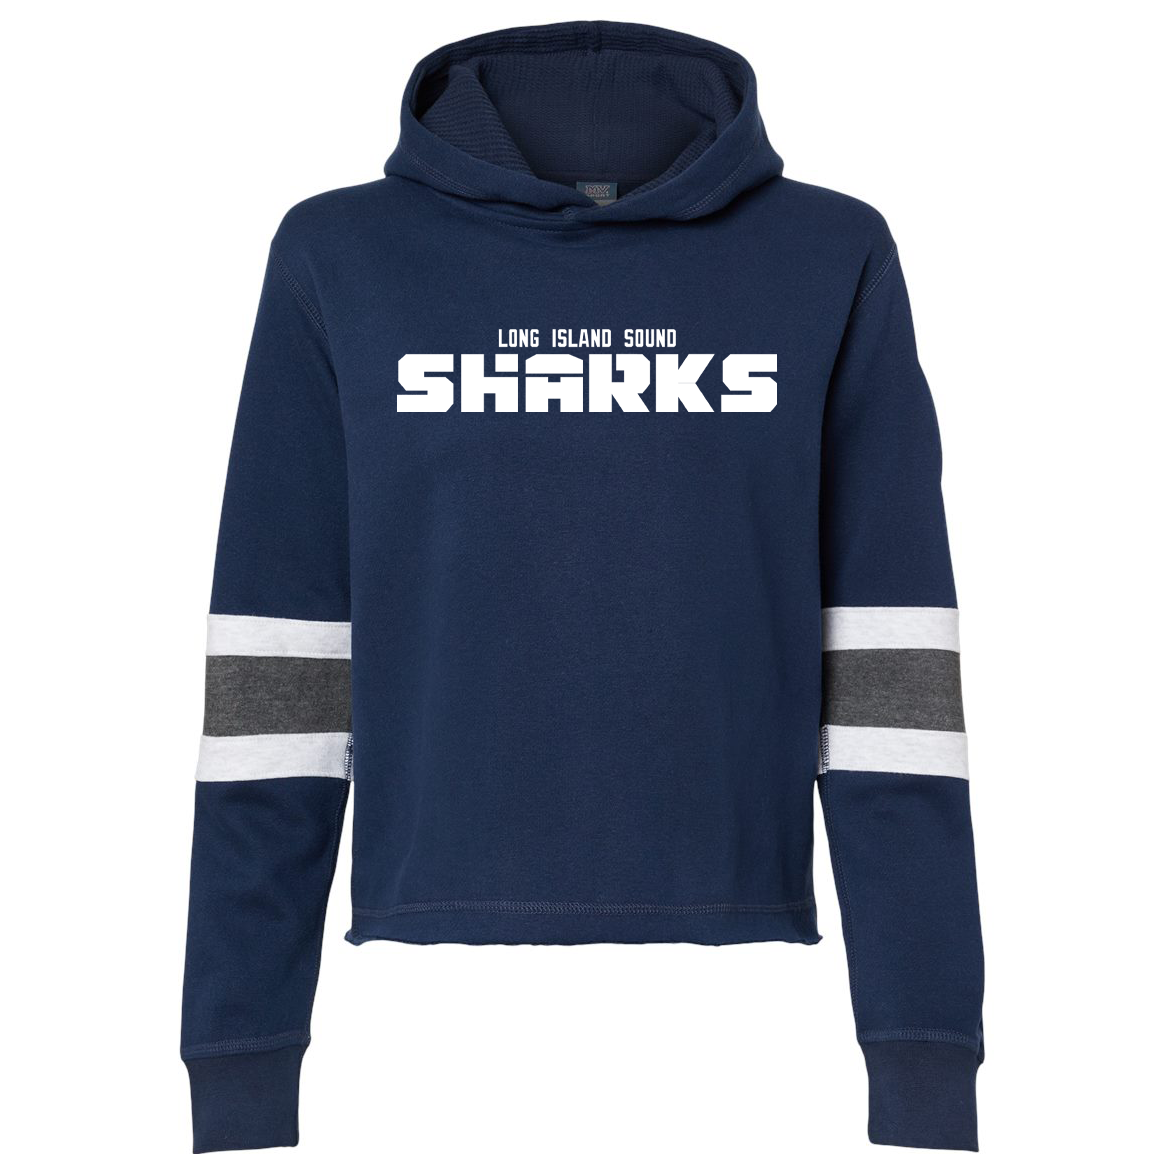 Long Island Sound Sharks Football Women's Sueded Fleece Thermal Lined Hooded Sweatshirt